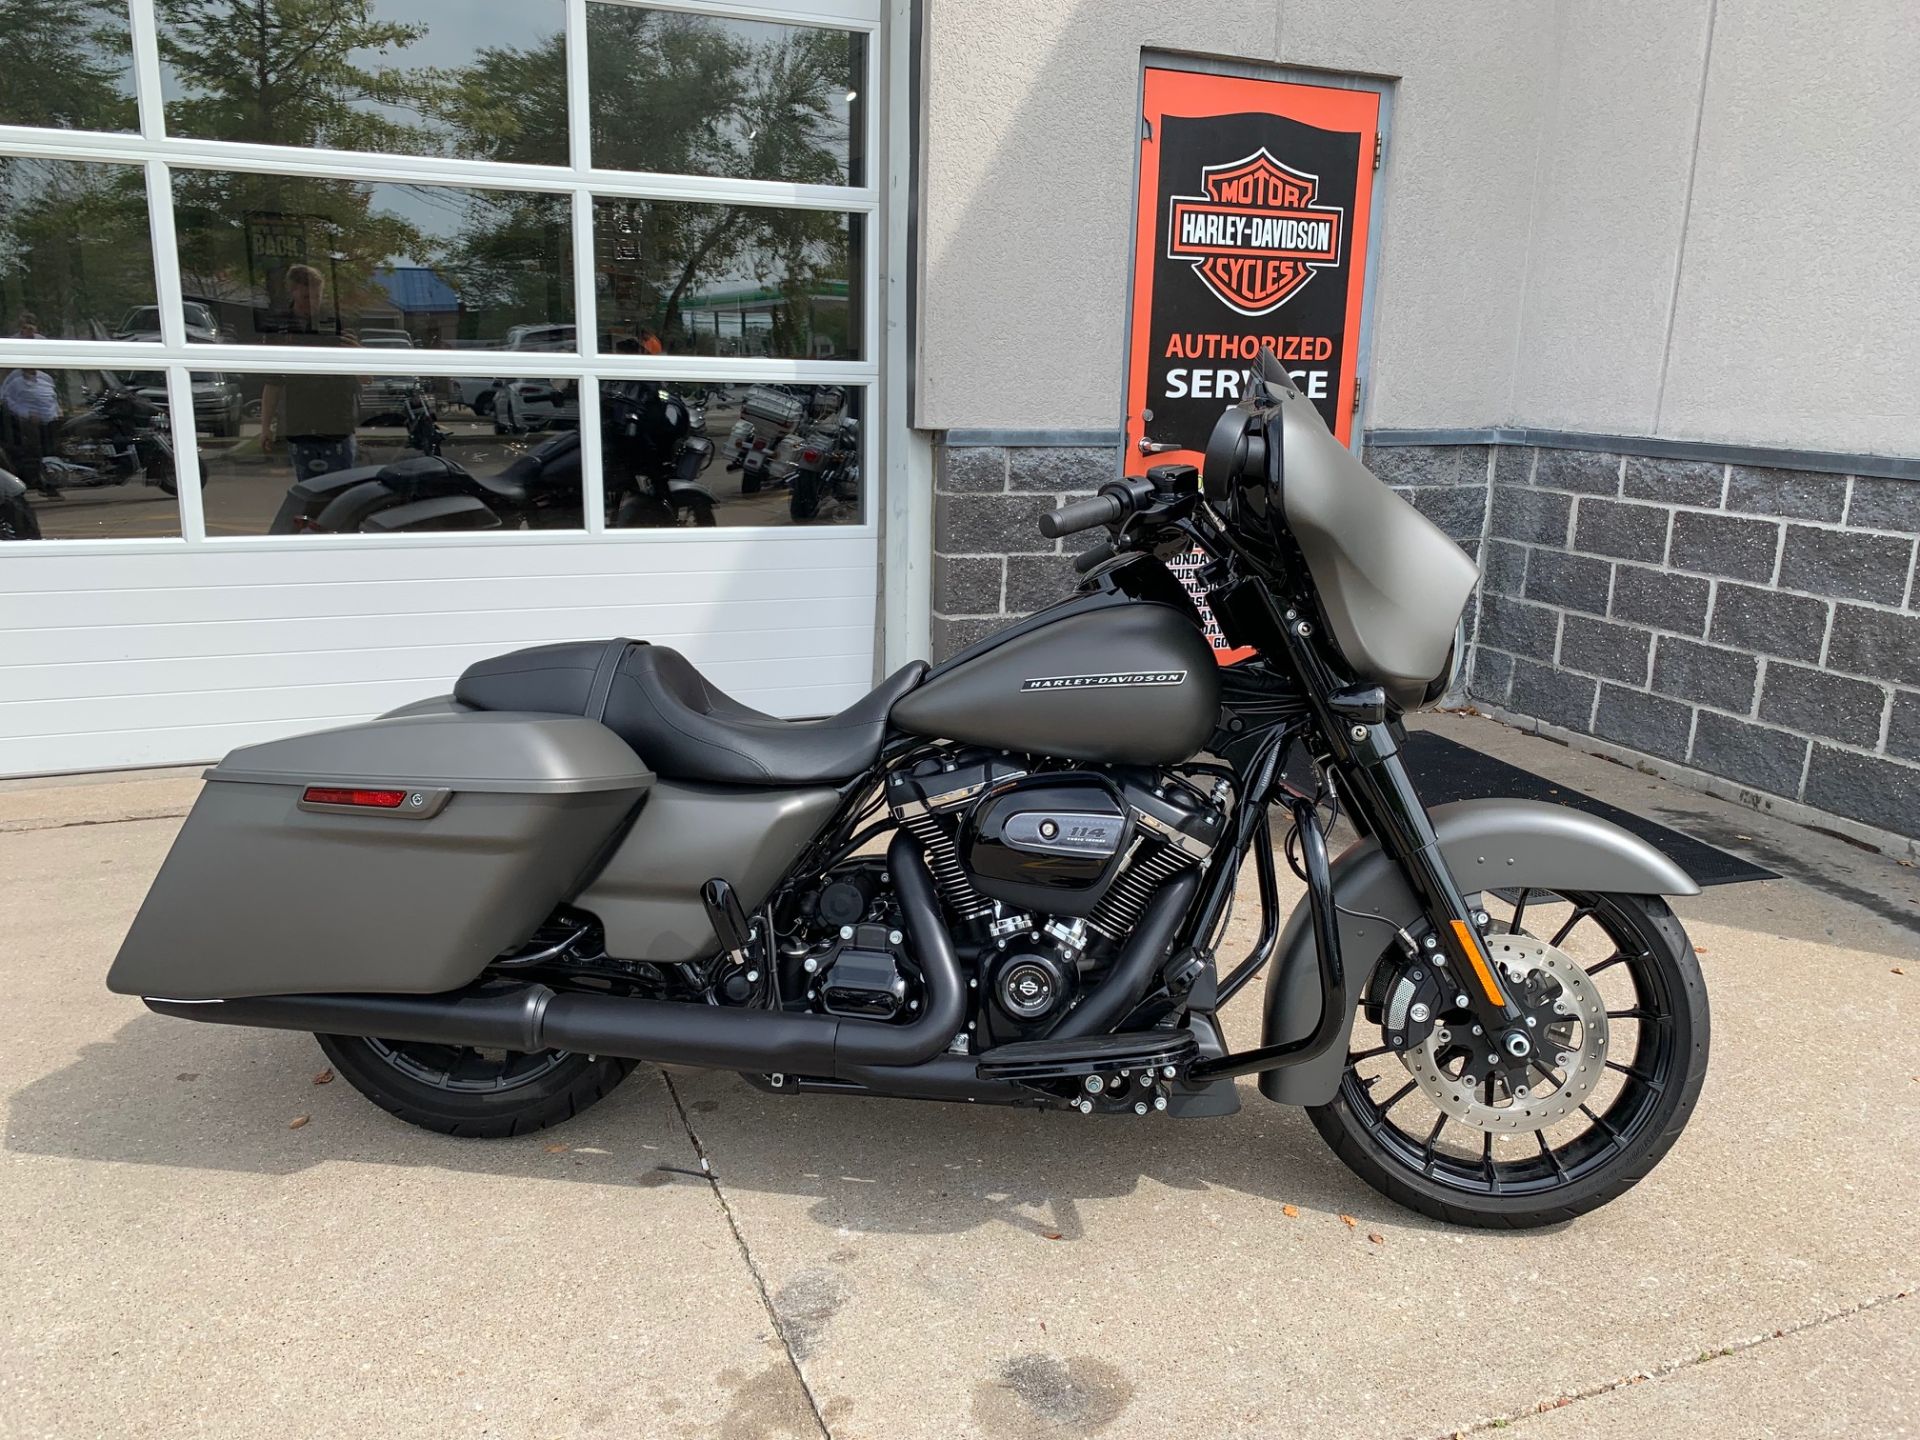 Used 2019 Harley Davidson Street Glide Special Industrial Gray Denim Motorcycles In Dubuque Ia U602691